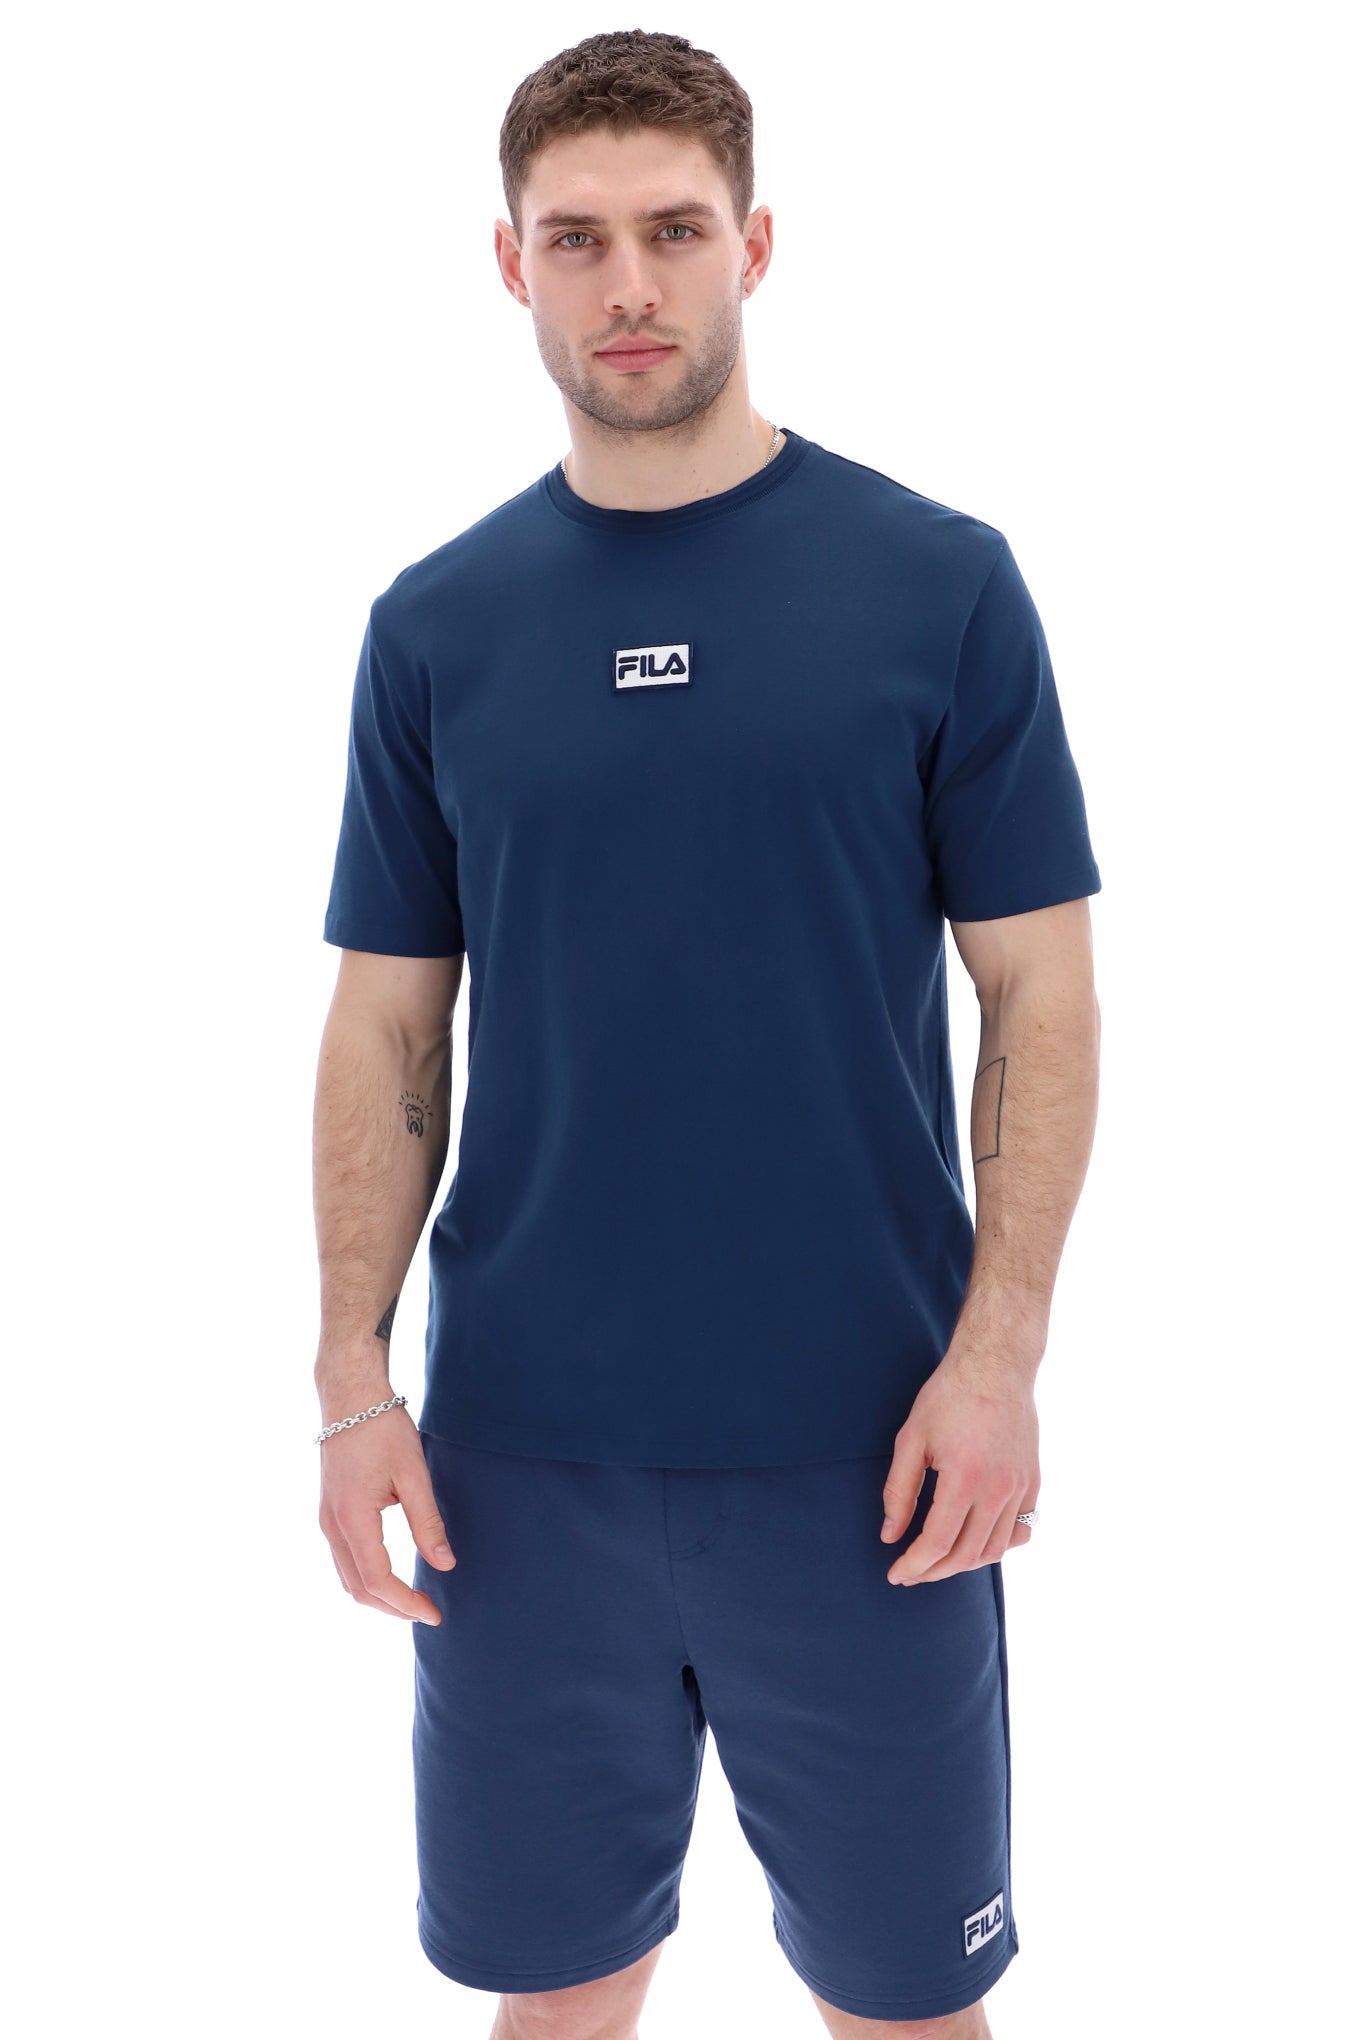 Fila DAX T-Shirt - Moonlit Ocean